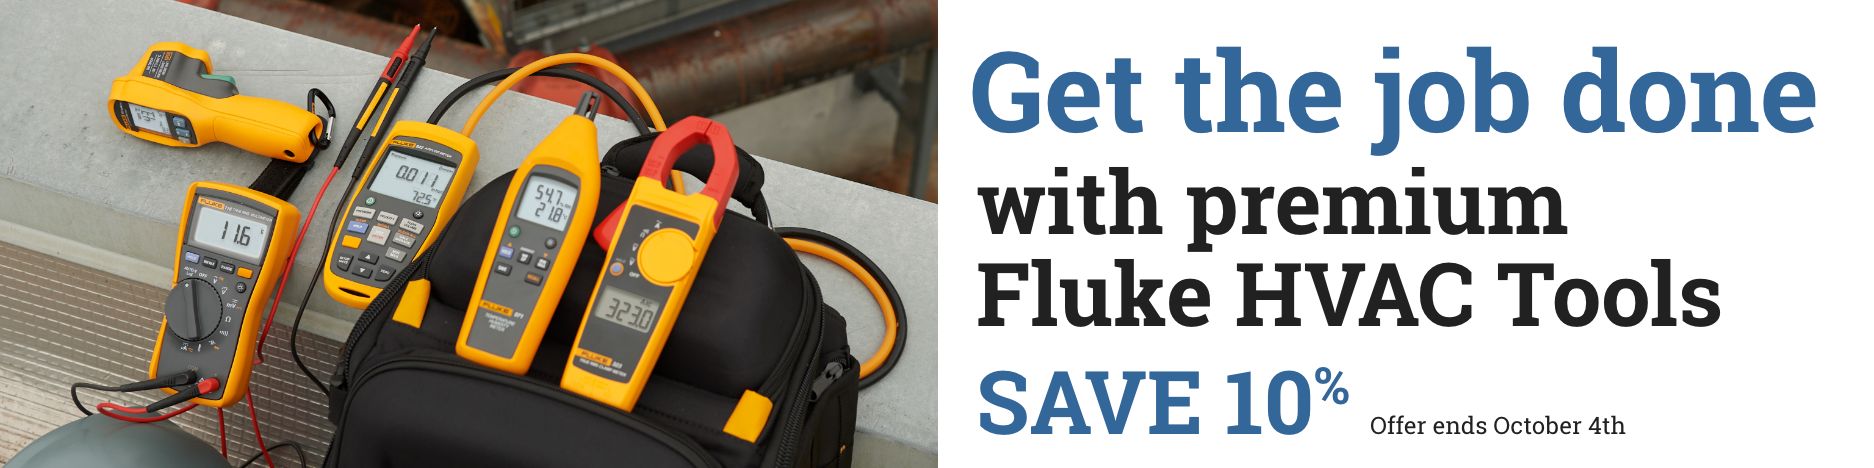 10% OFF Fluke HVAC tools Get the job done with premium Fluke HVAC Tools